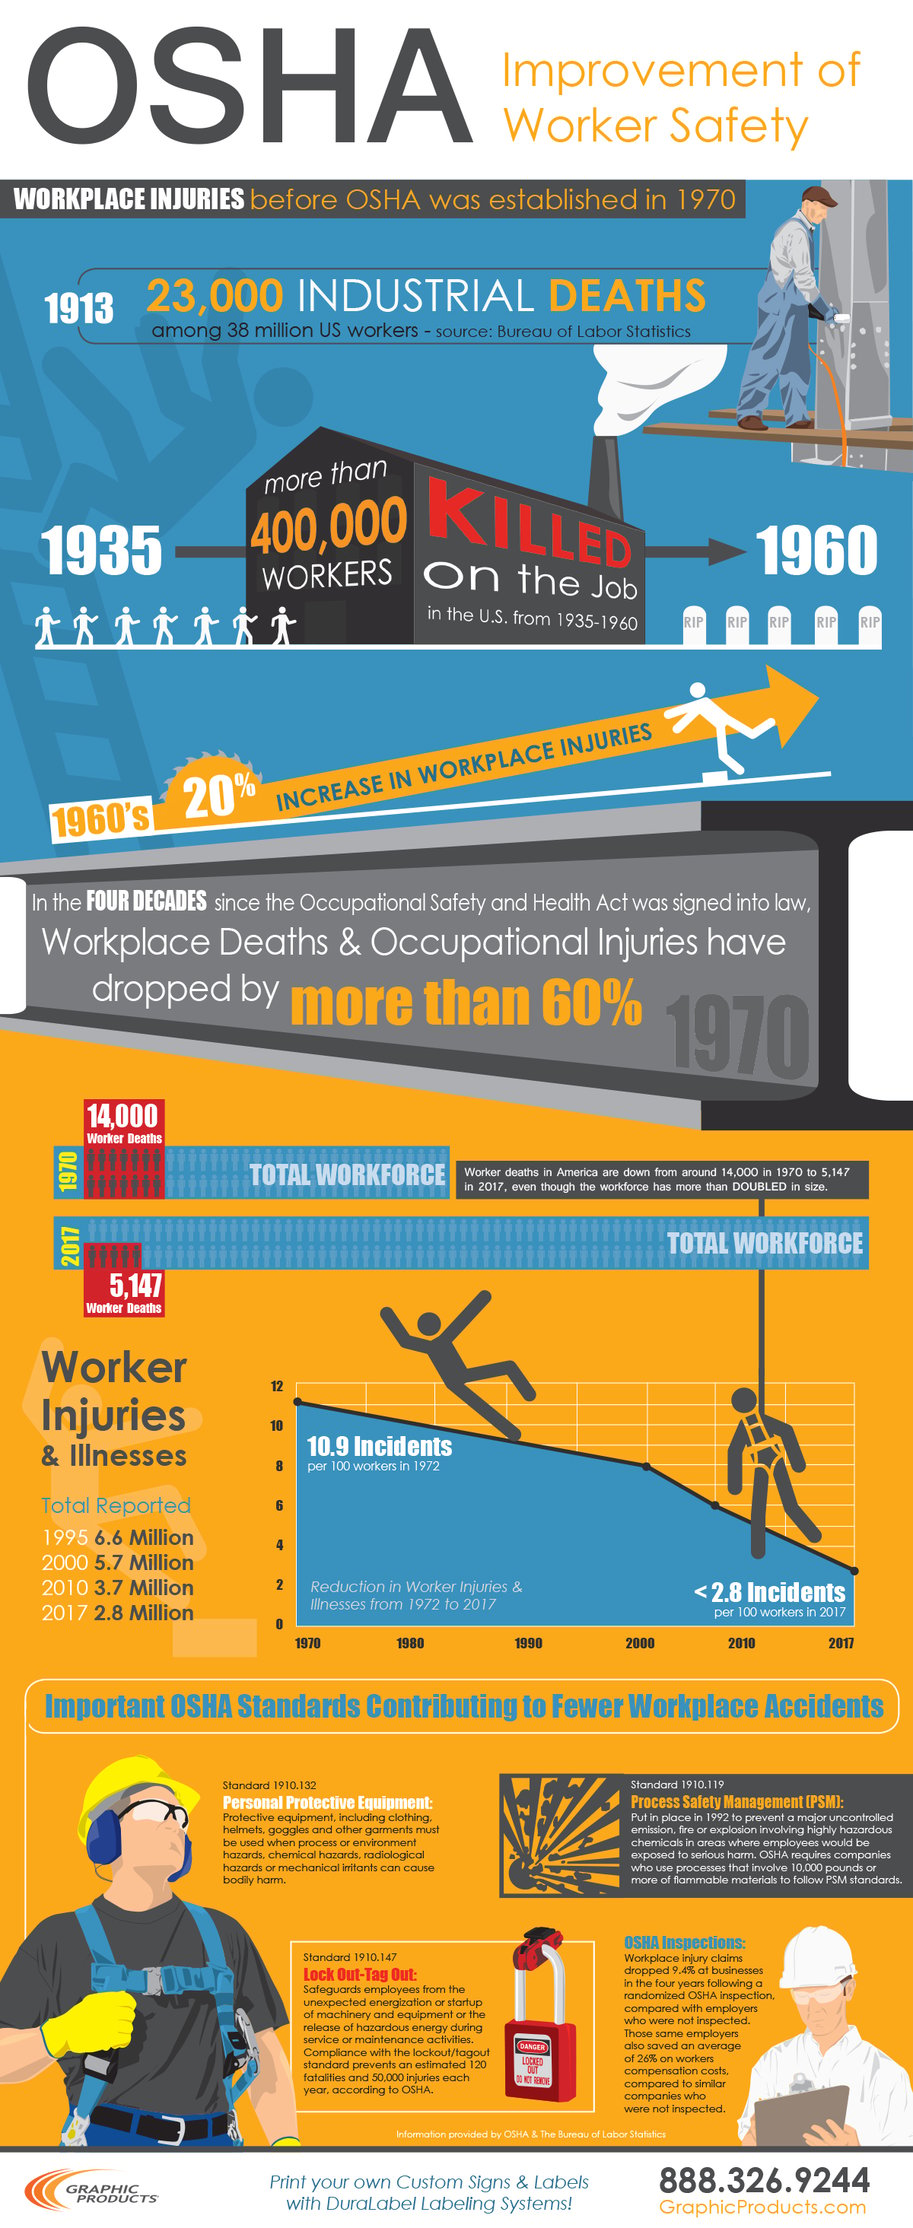 osha-improvement-of-worker-safety-infographic